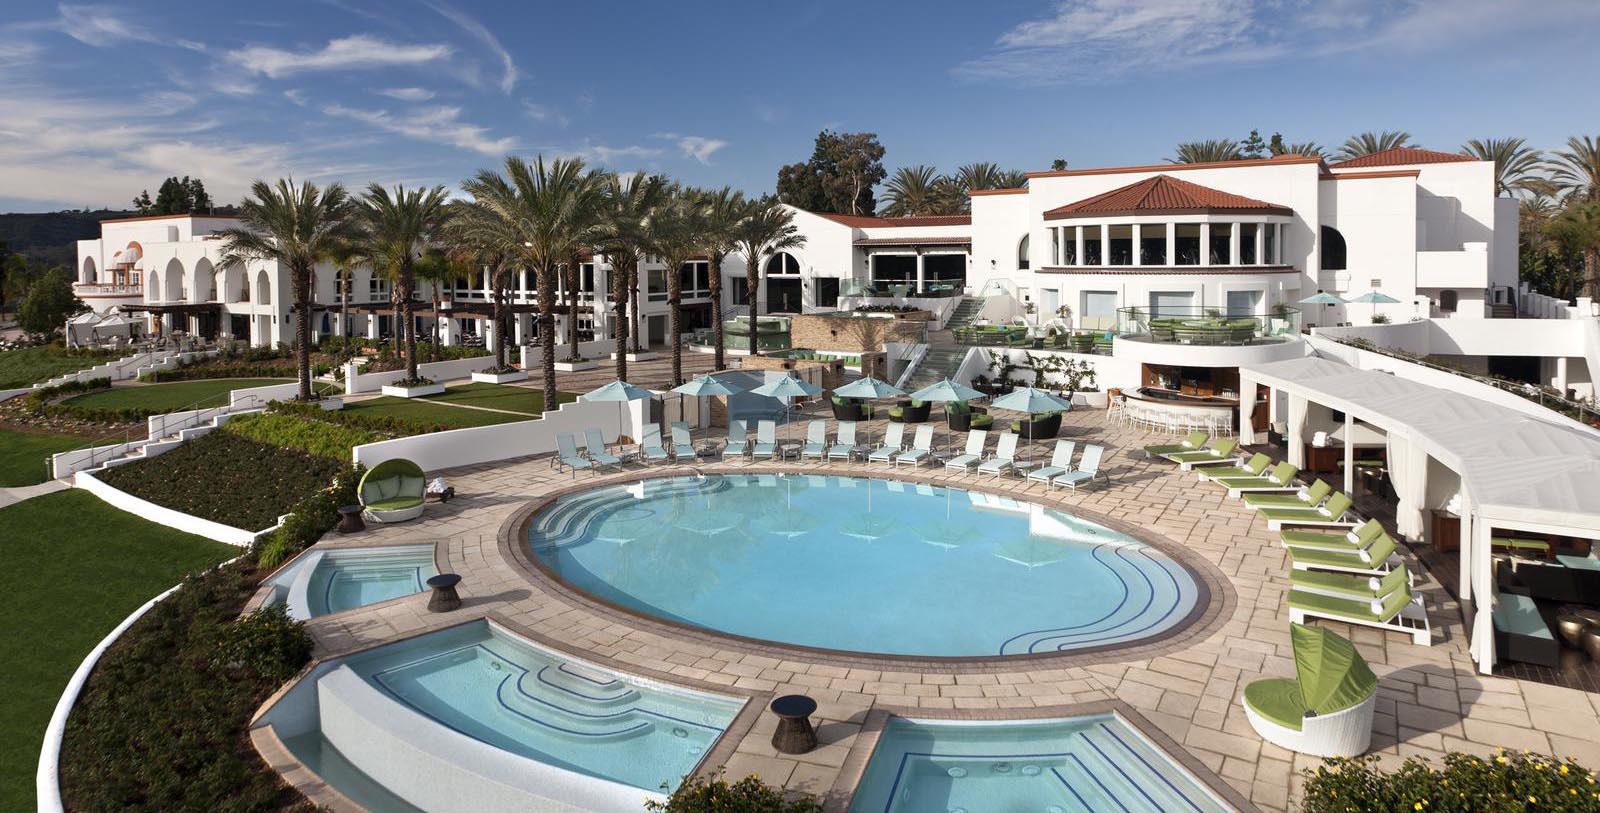 Image of Hotel Exterior & Outdoor Pool, Omni La Costa Resort, Carlsbad, California, 1965, Member of Historic Hotels of America, Overview